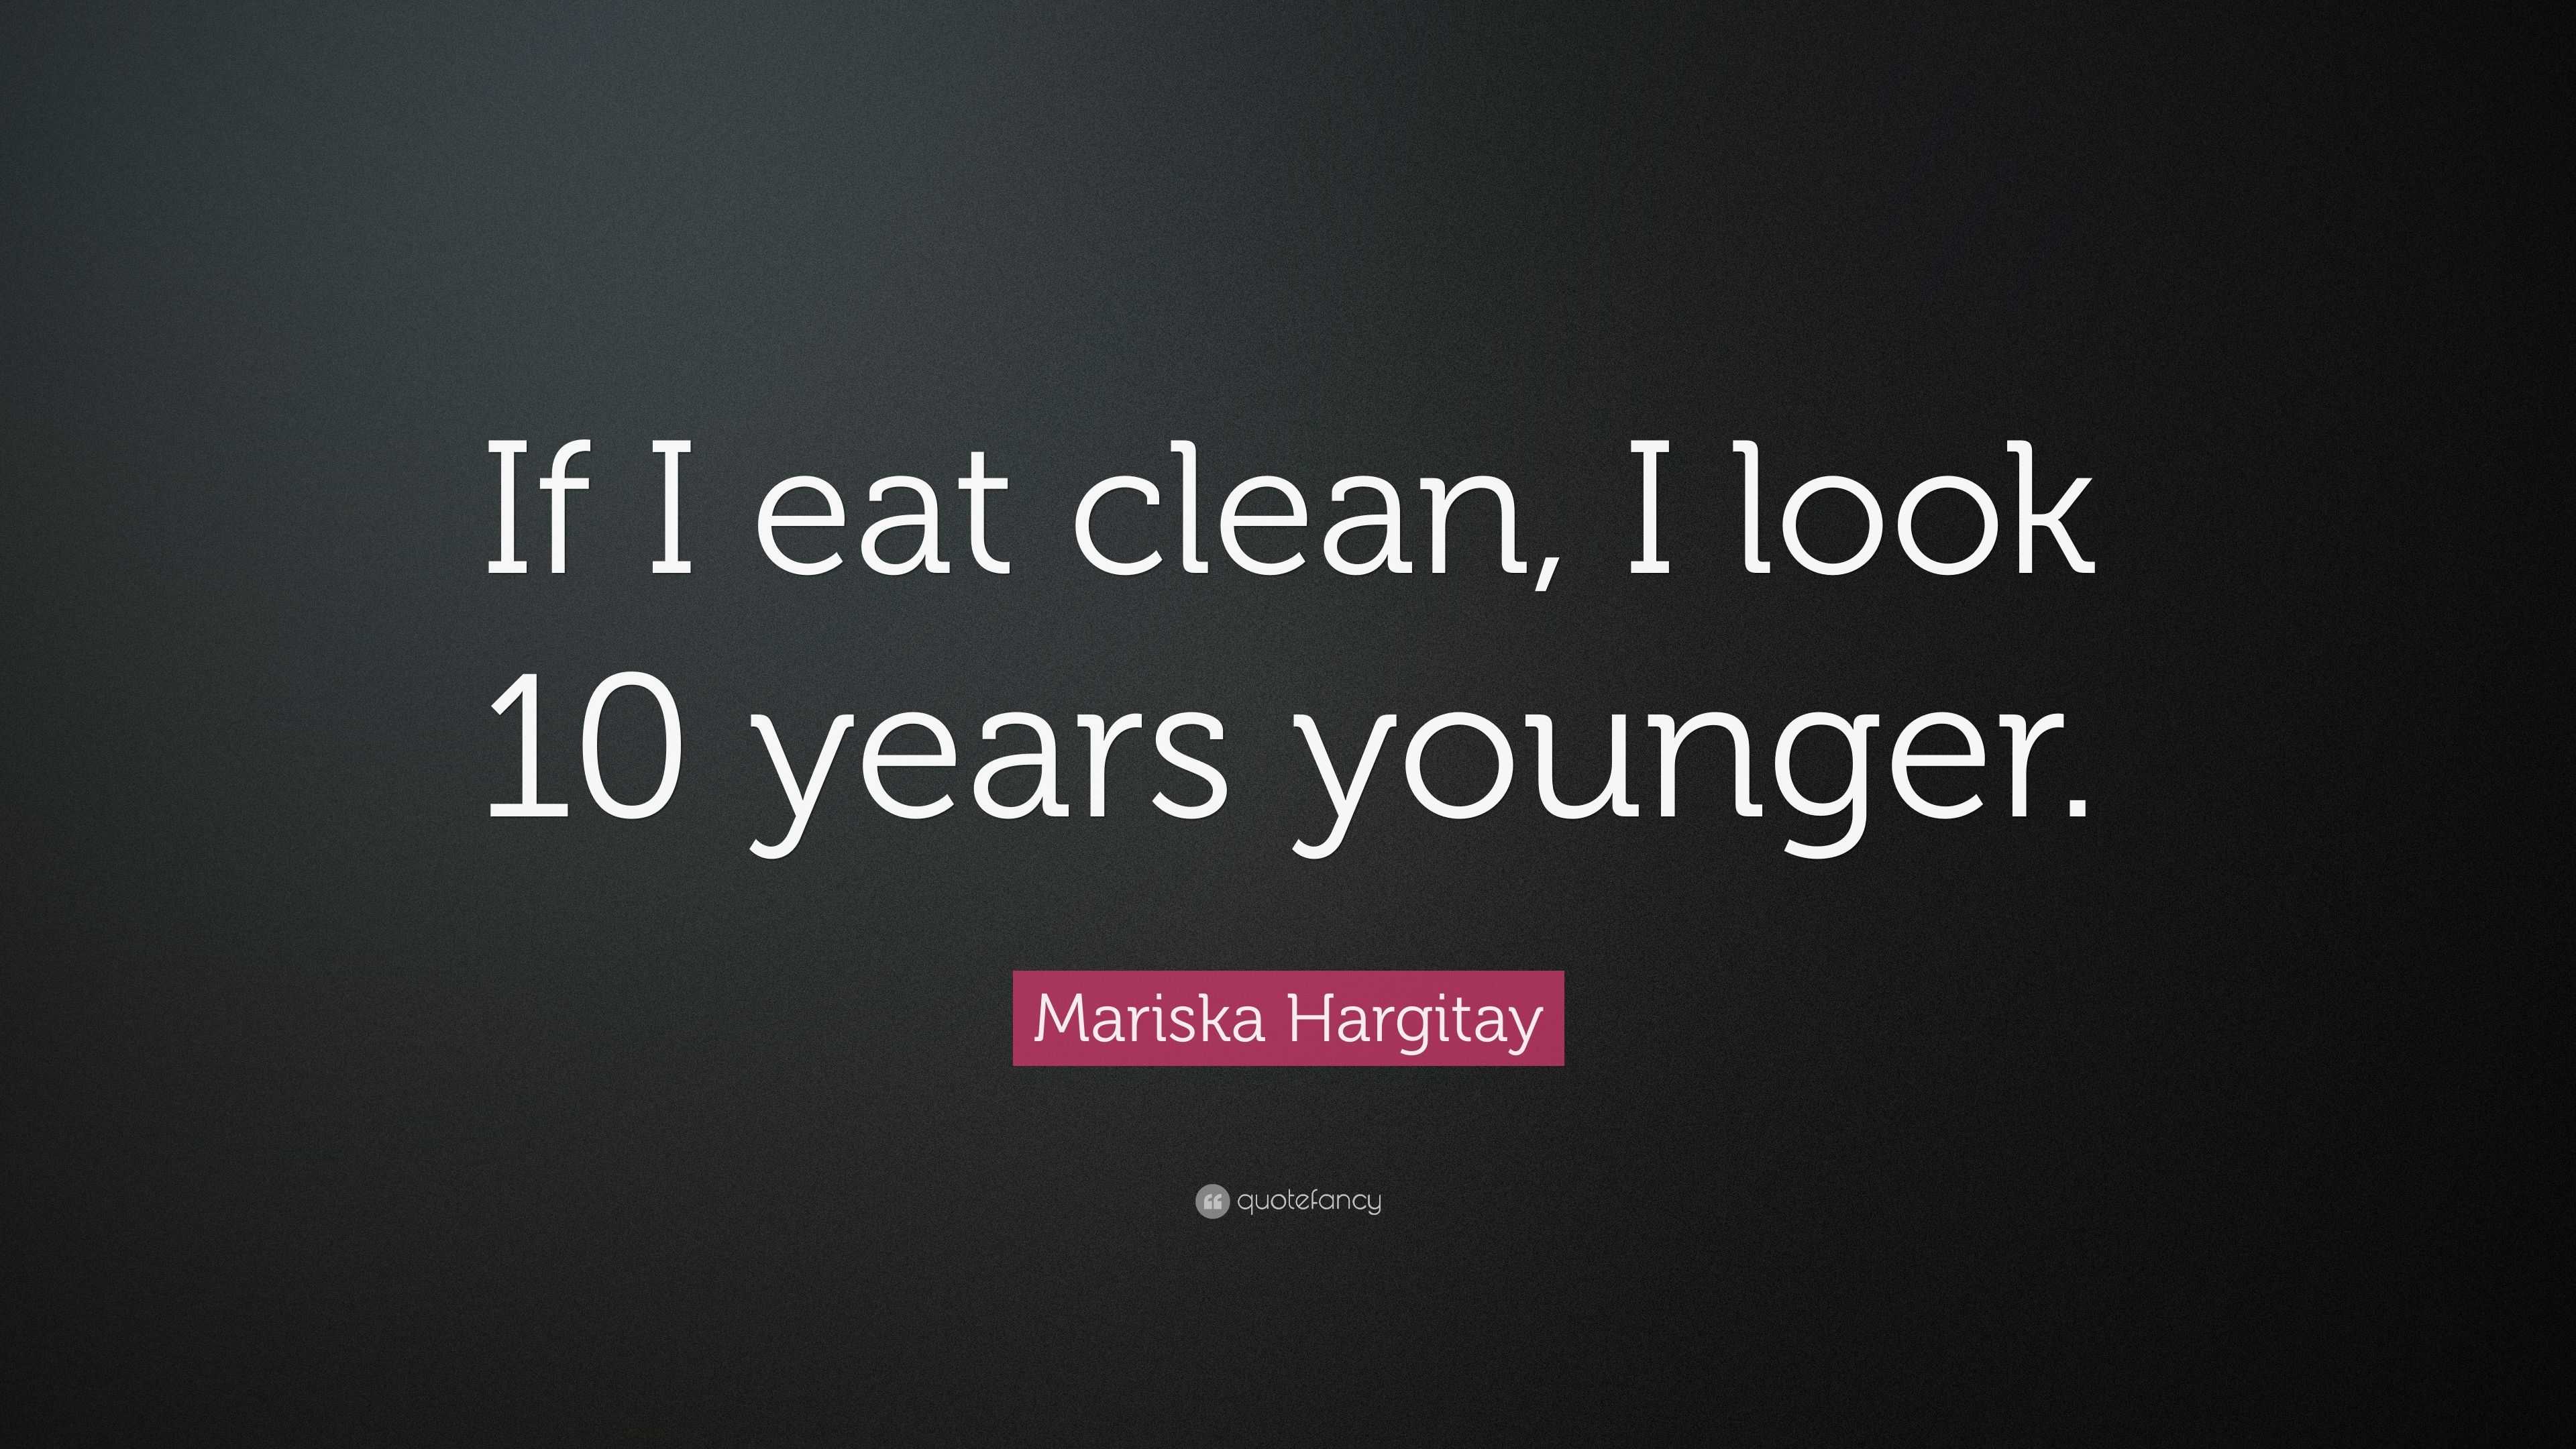 Mariska Hargitay Quote: “If I eat clean, I look 10 years younger.”